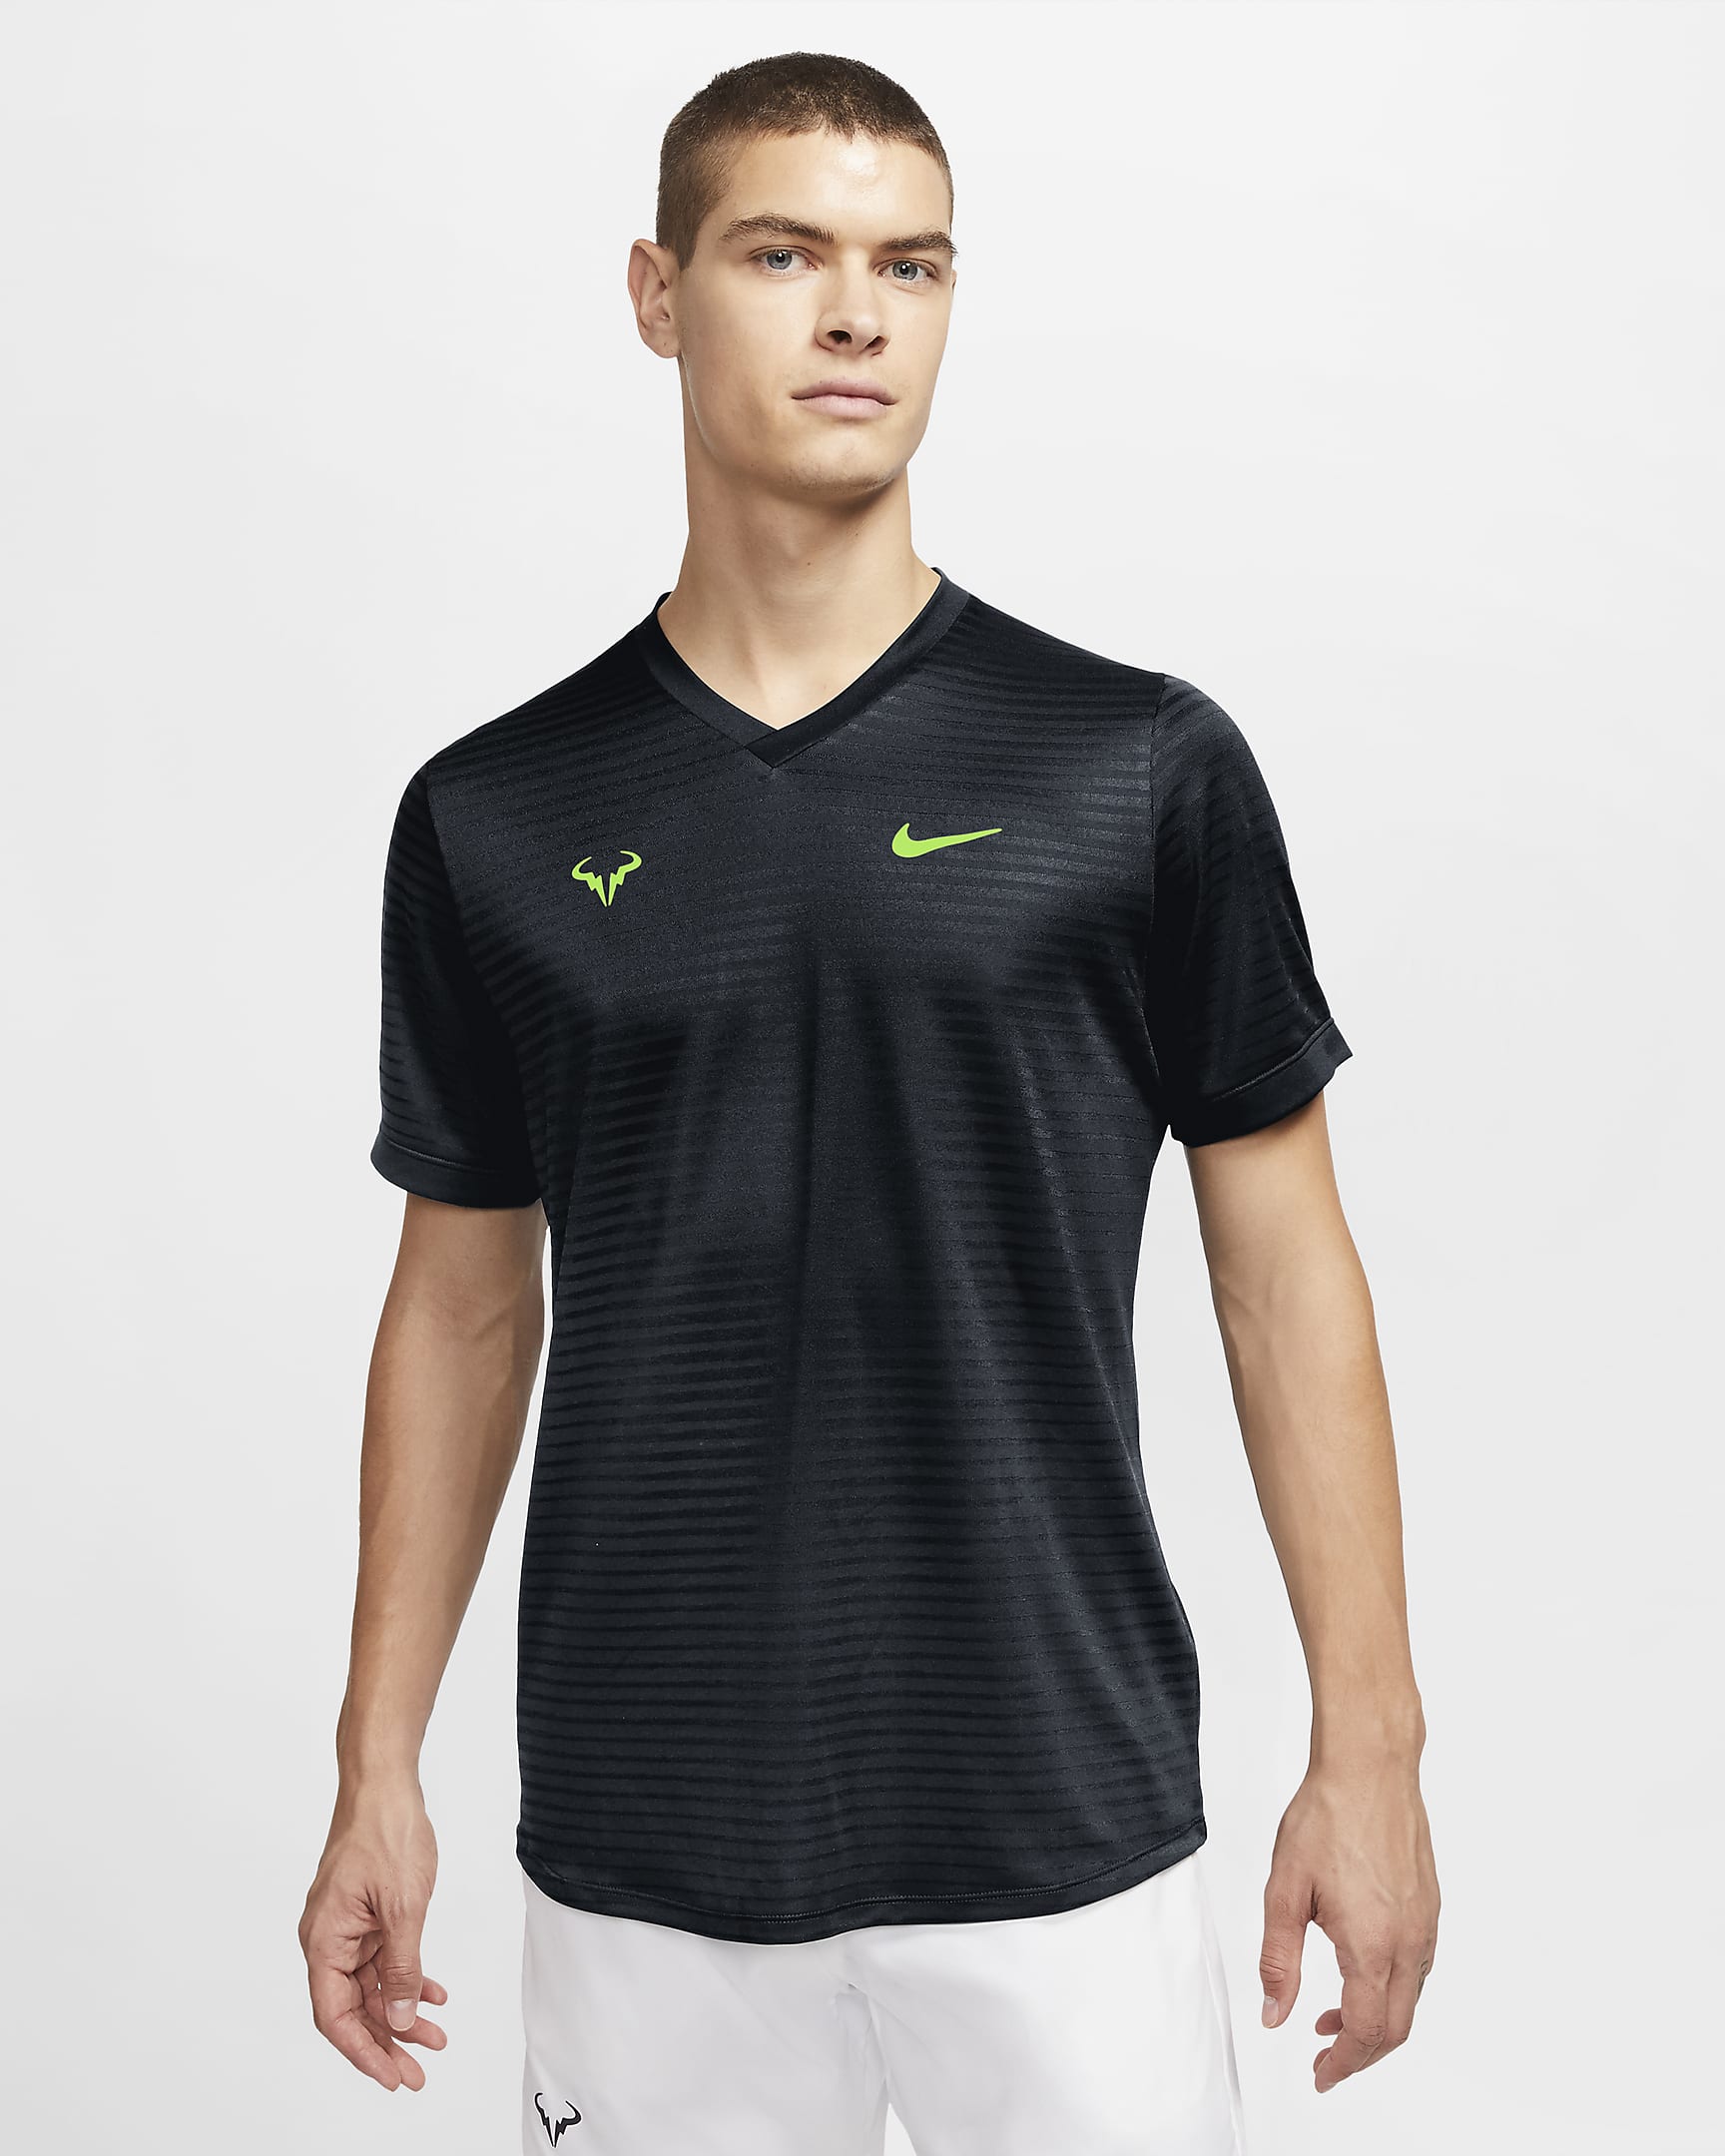 Rafa Challenger Men's Short-Sleeve Tennis Top. Nike PH